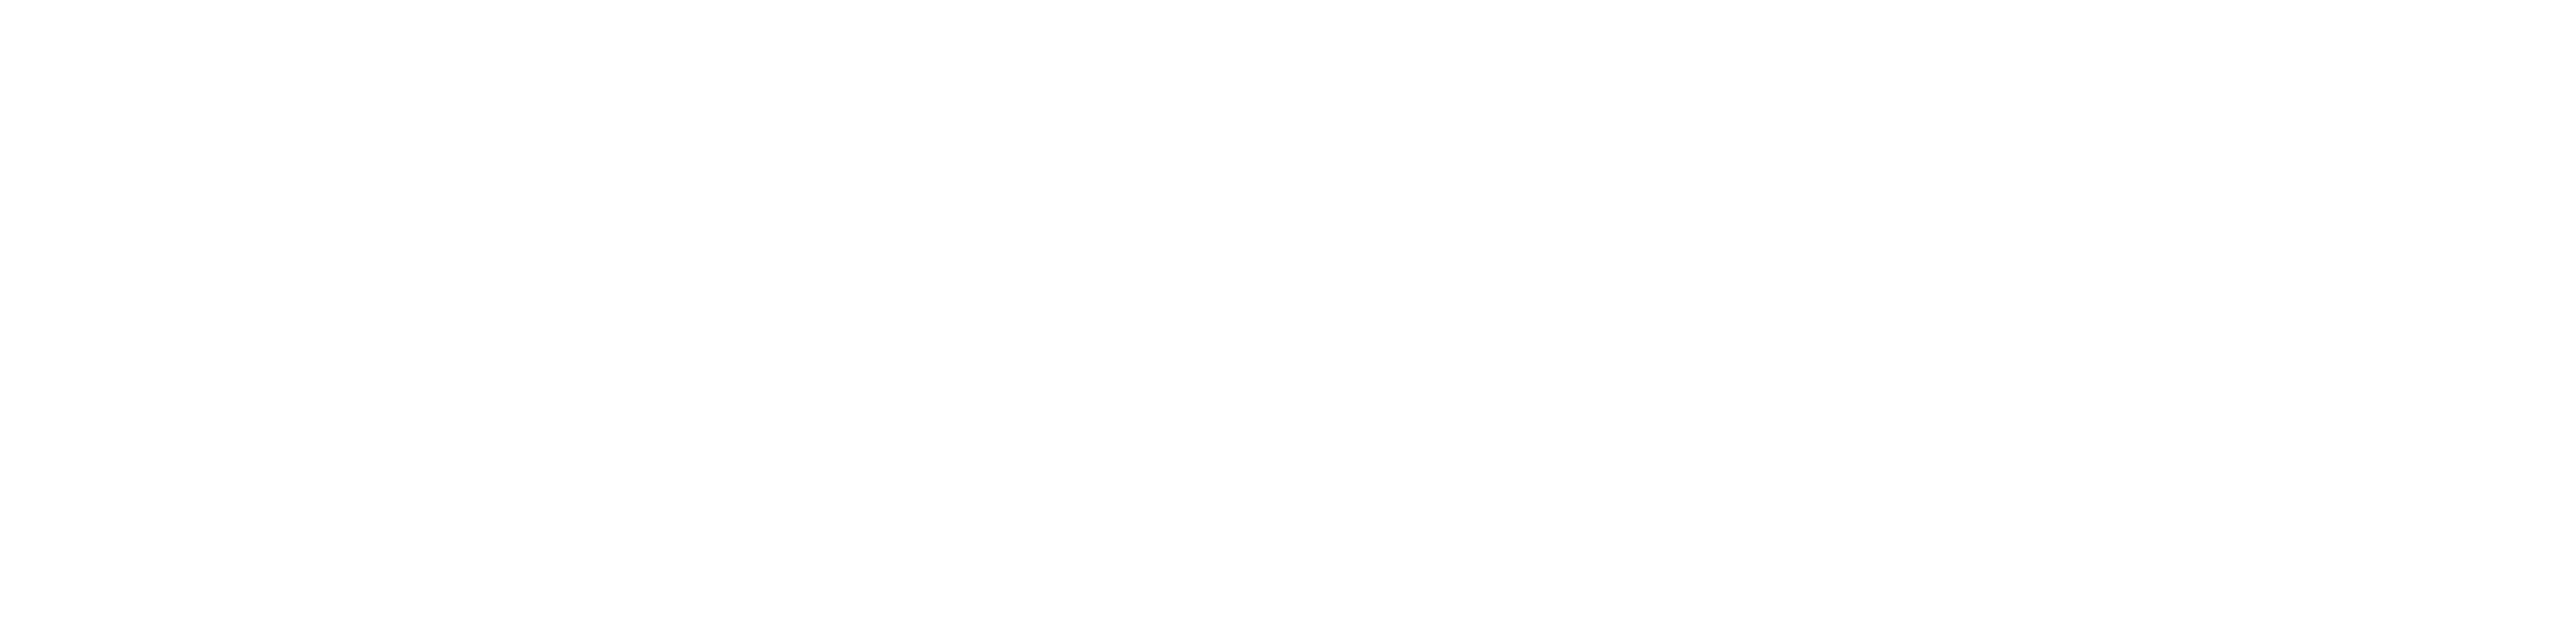 SAN PANTALEO - scritta_IT